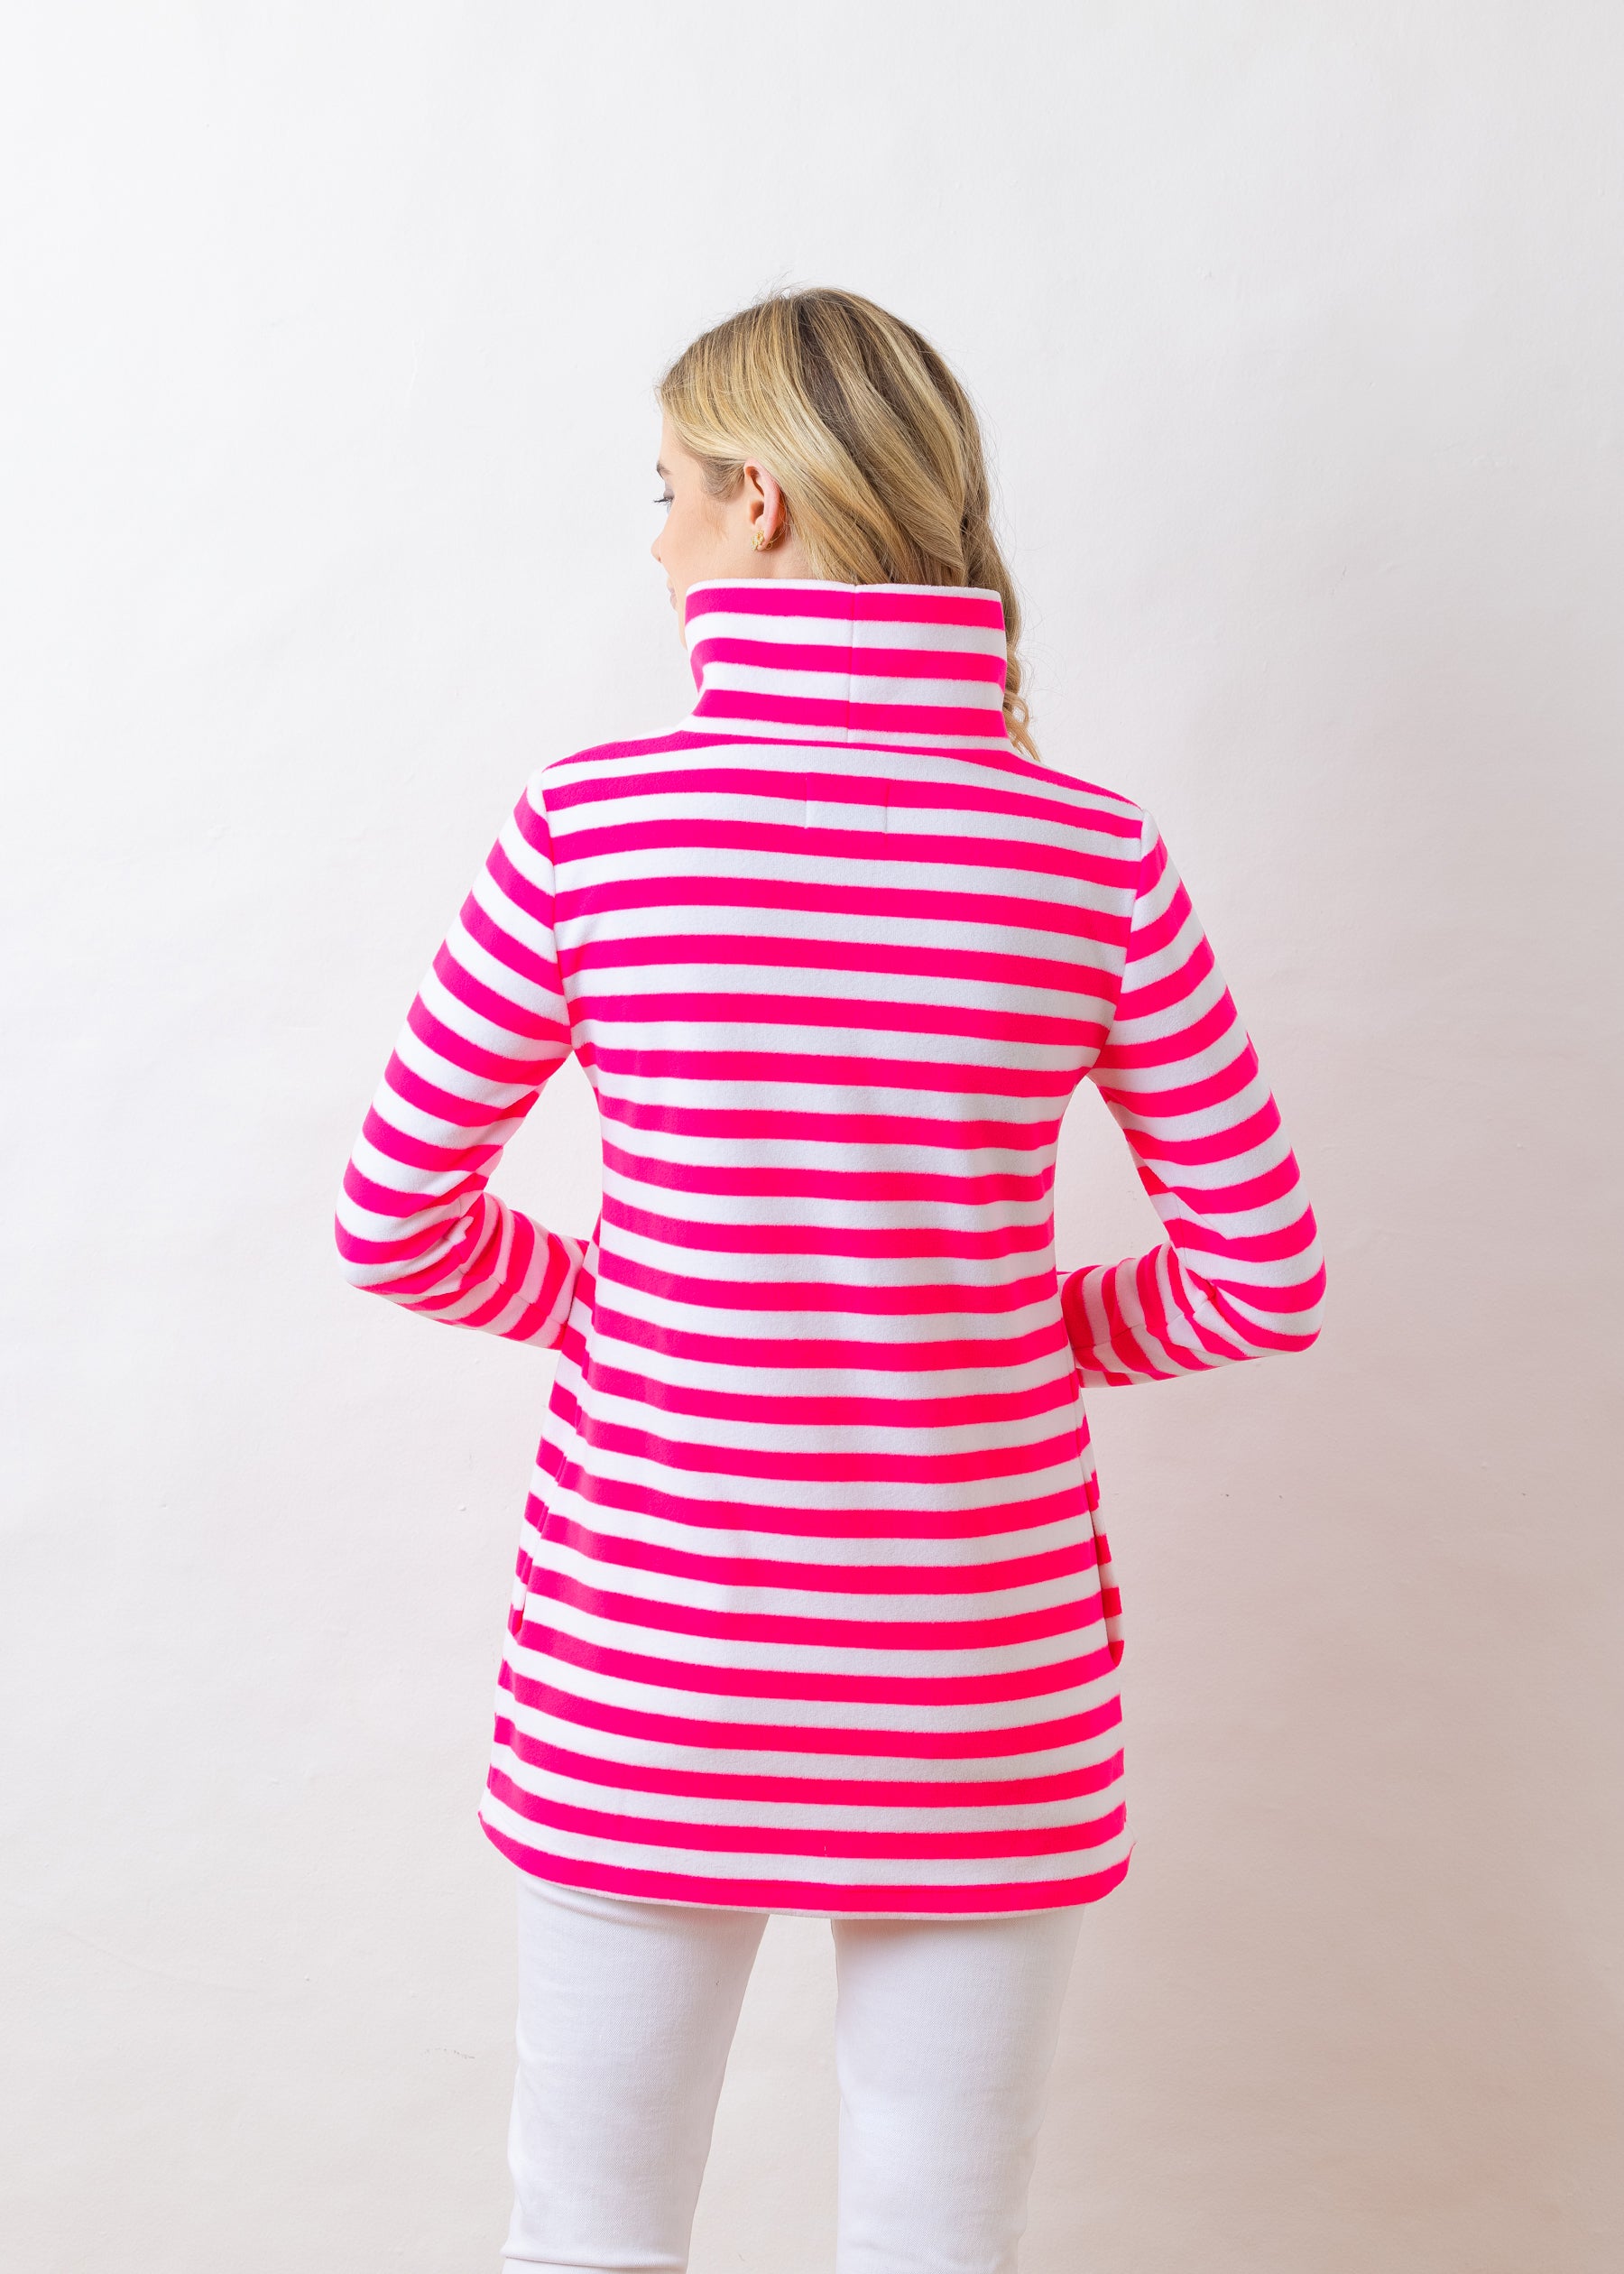 Cobble Hill Turtleneck in Striped Fleece (Neon Pink / White)